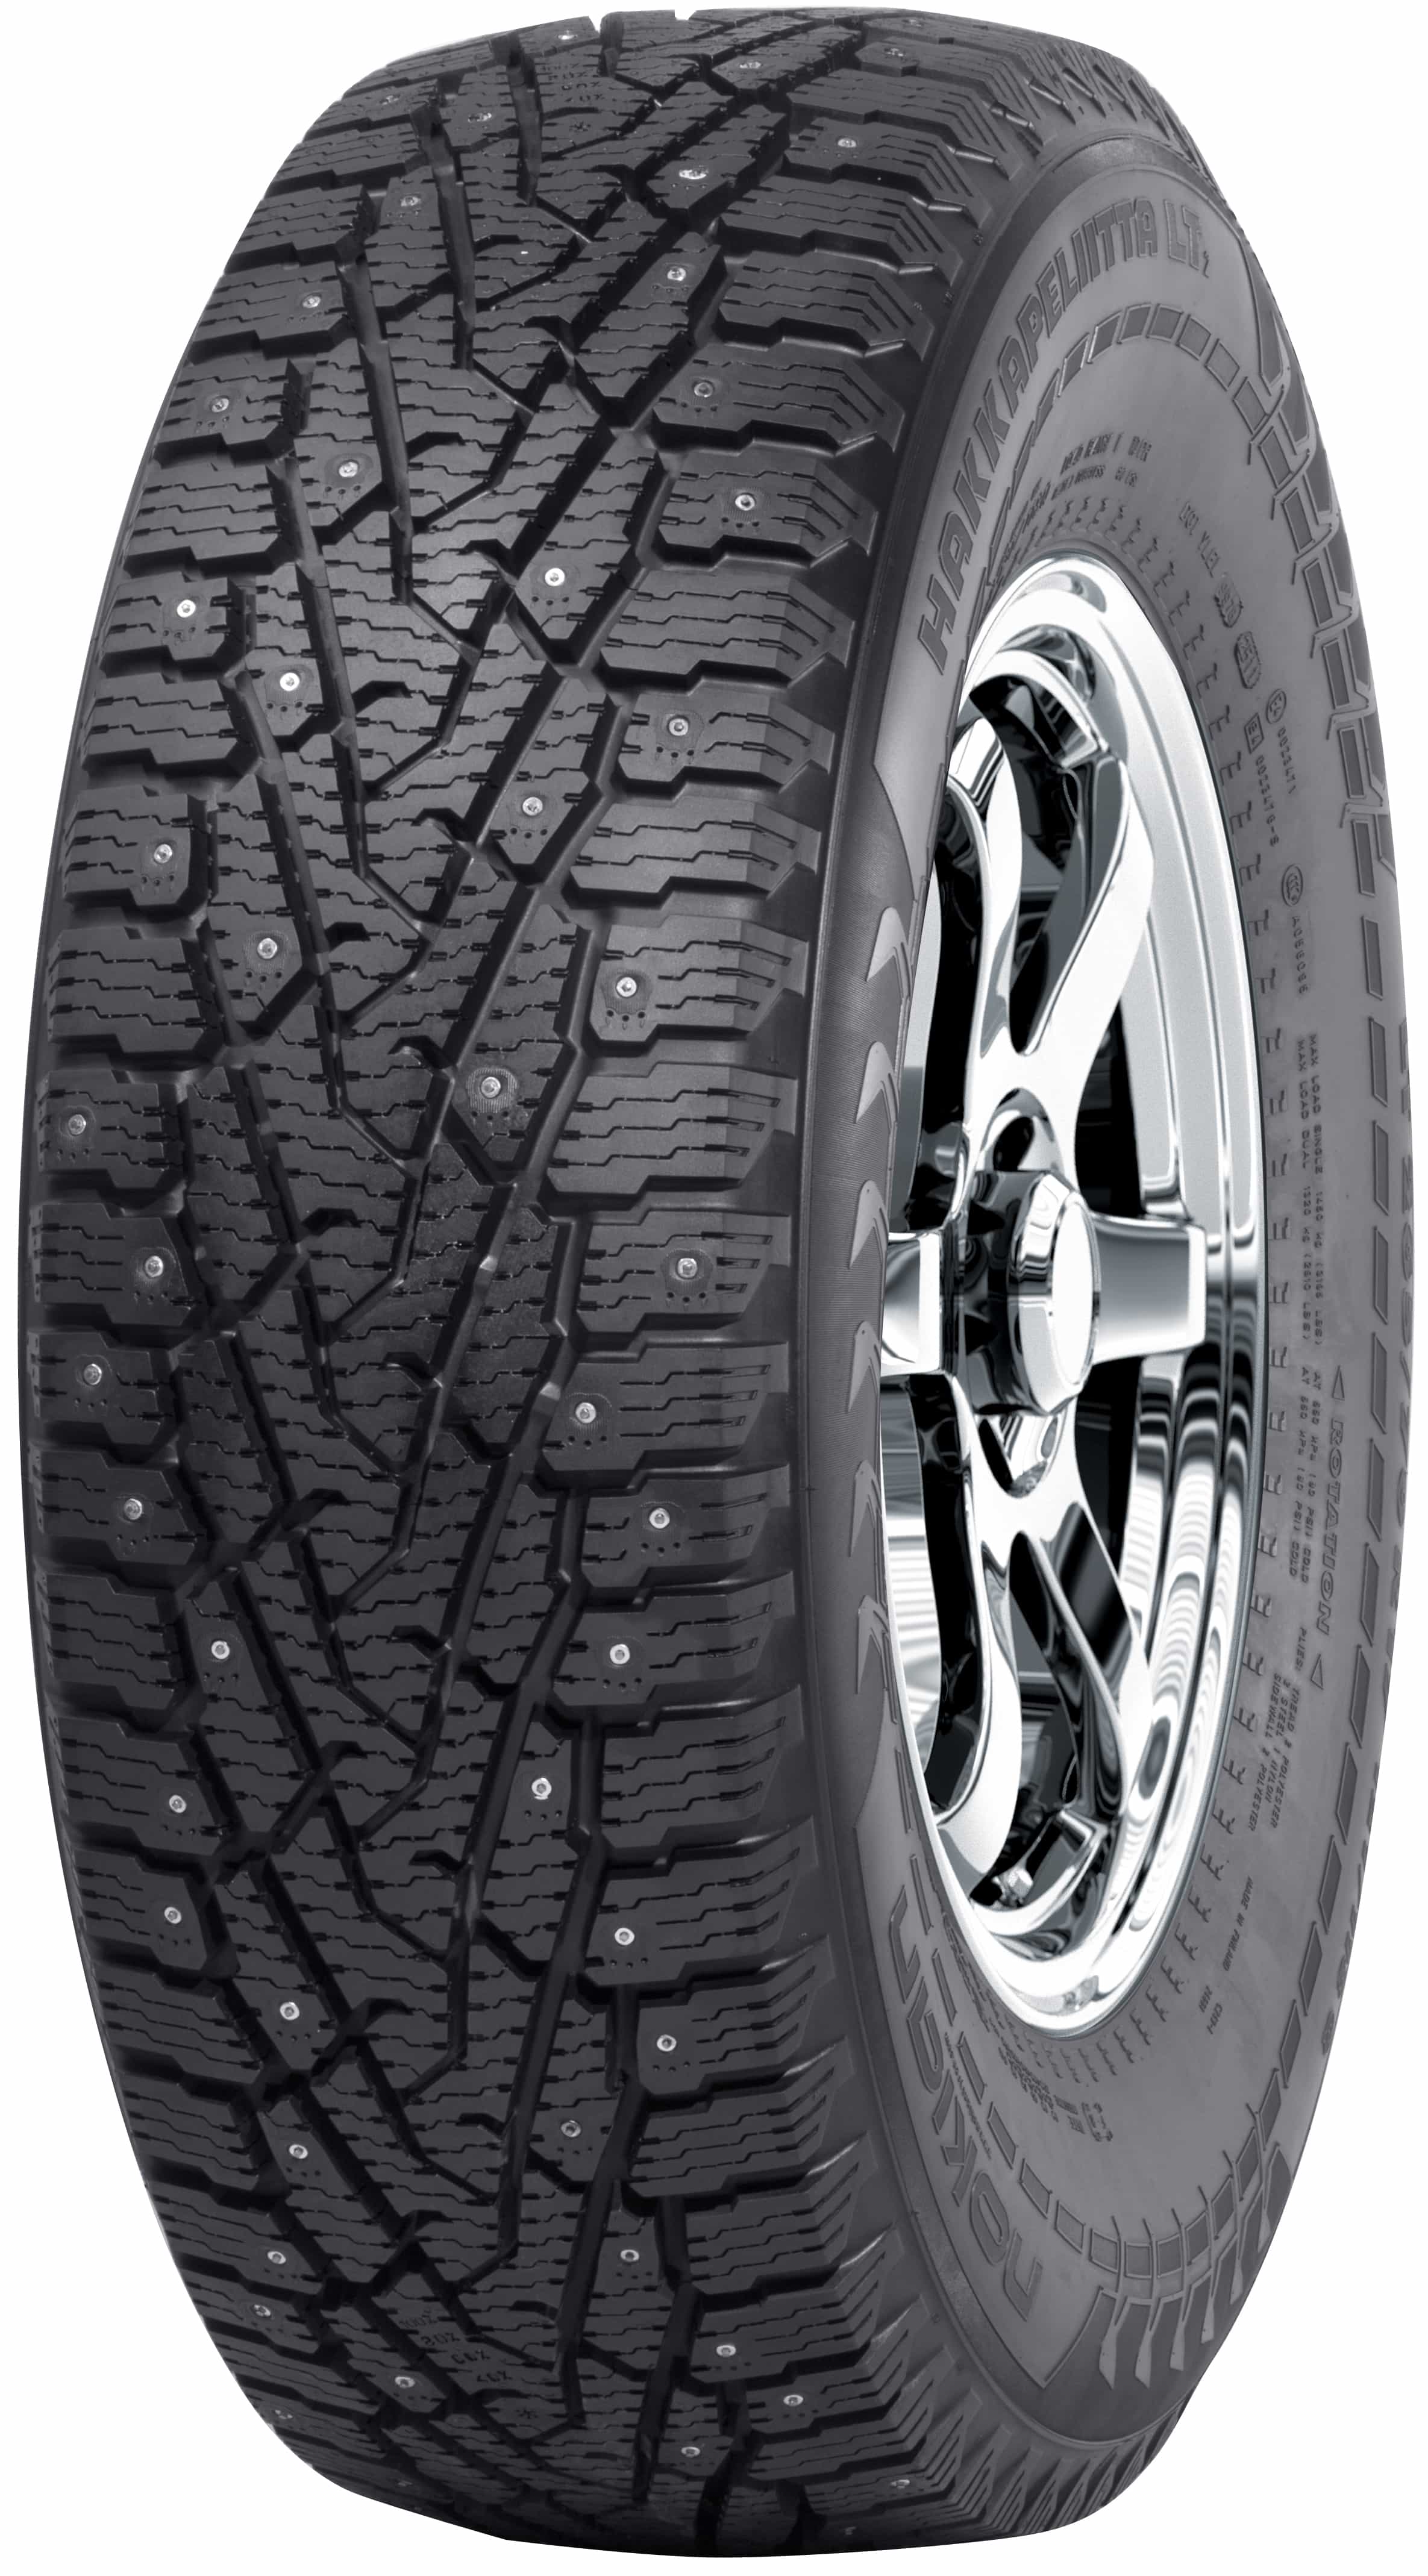 Tire Factory - Reno, NV, US, all terrain tires